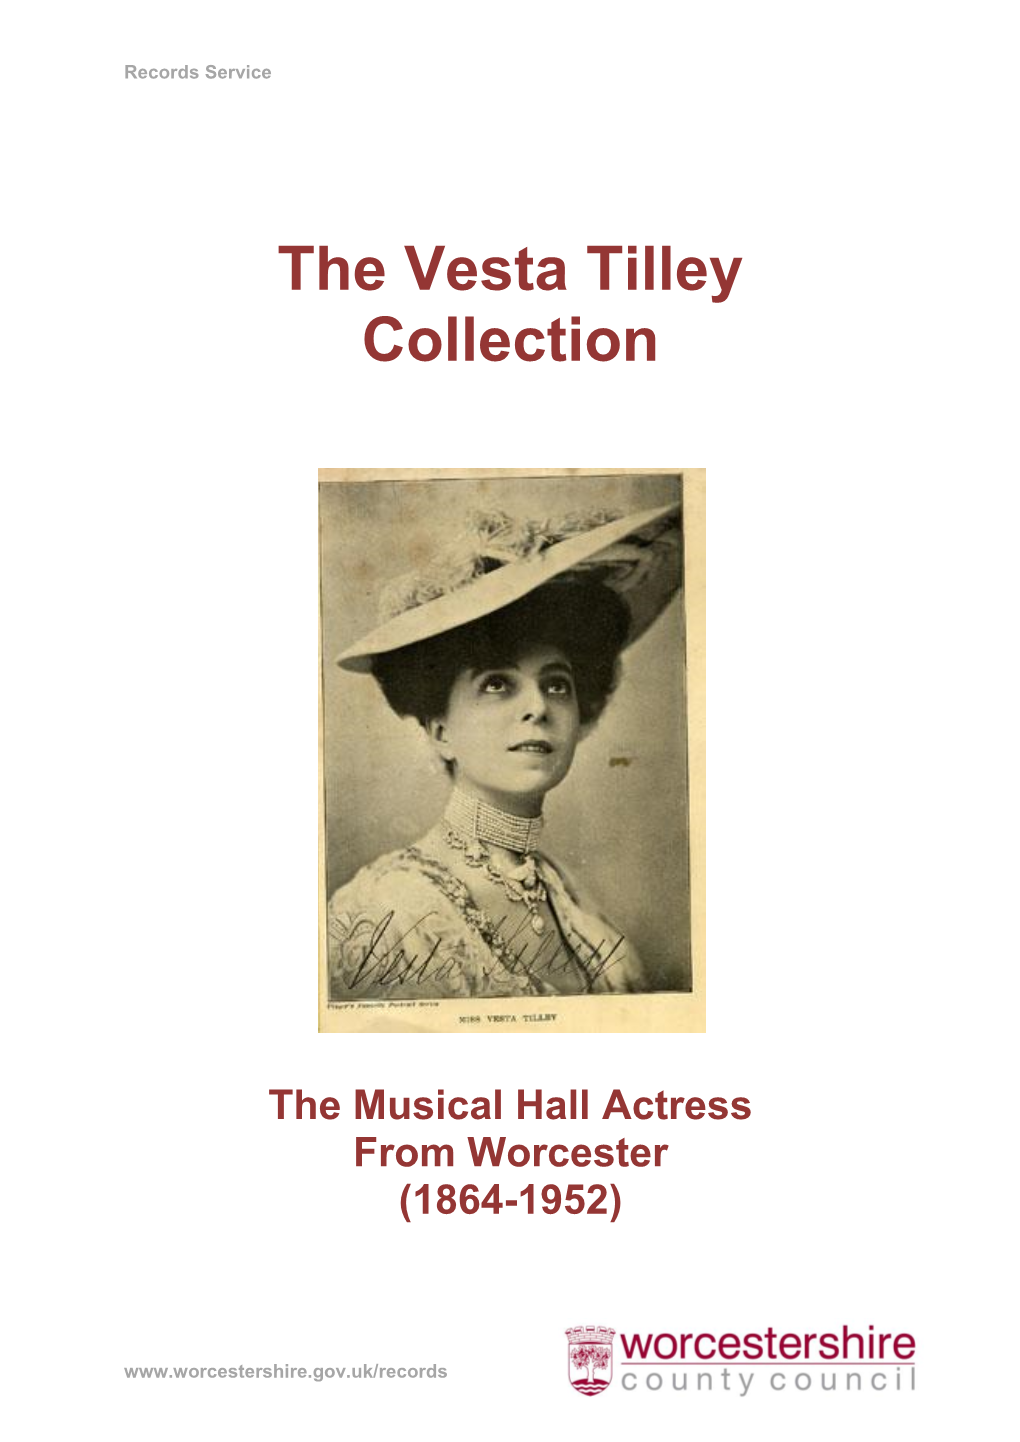 The Vesta Tilley Collection